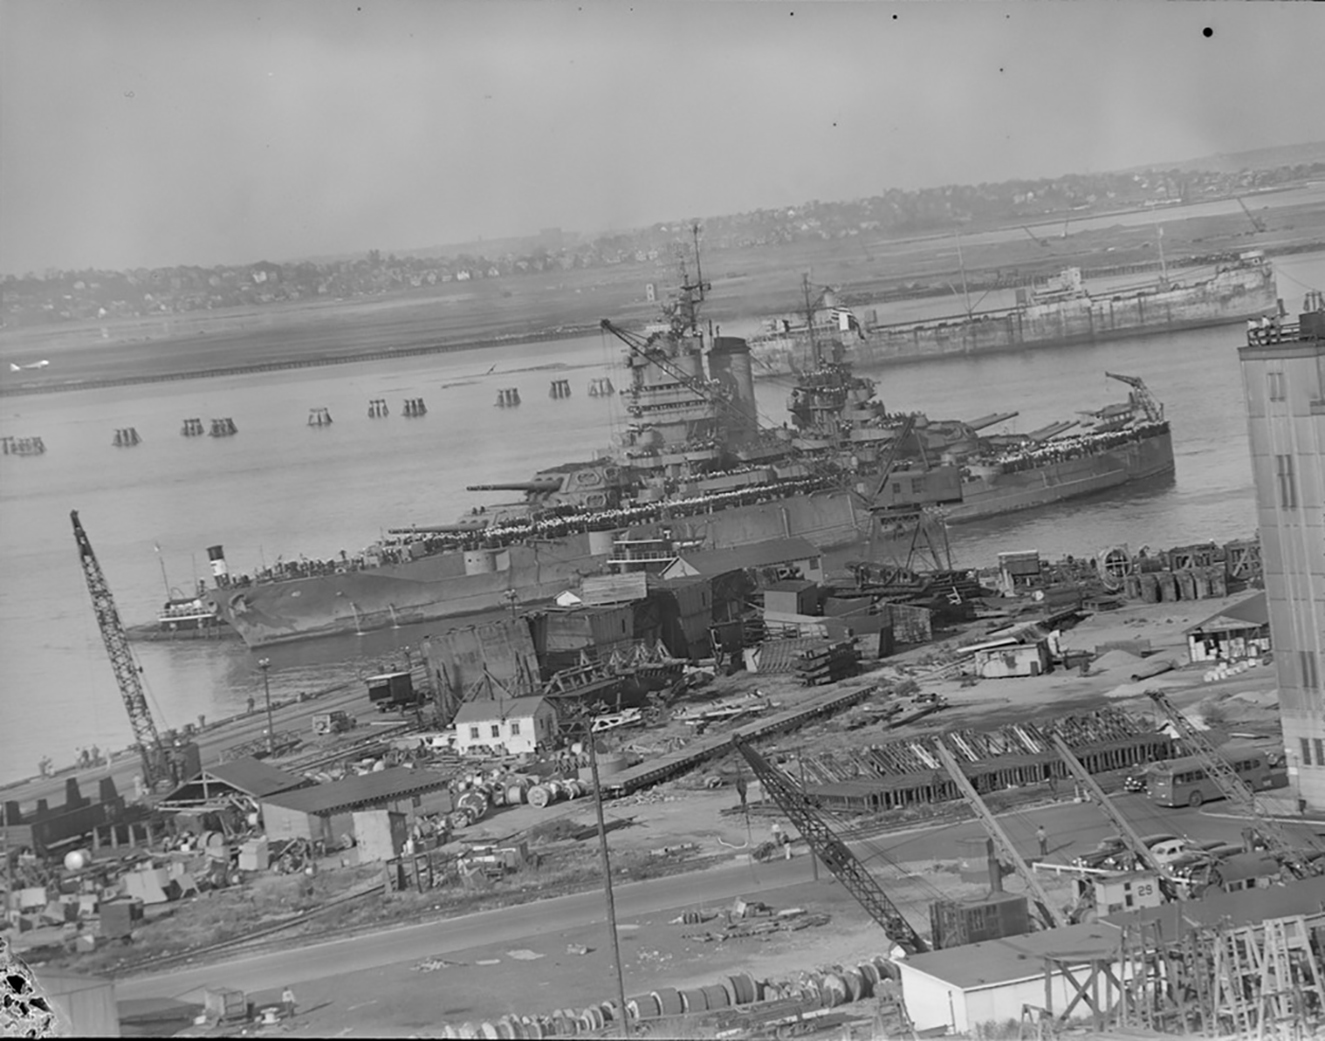 USS New Mexico, Boston Navy Yard, Massachusetts, United States, 17 Oct 1945, photo 2 of 2